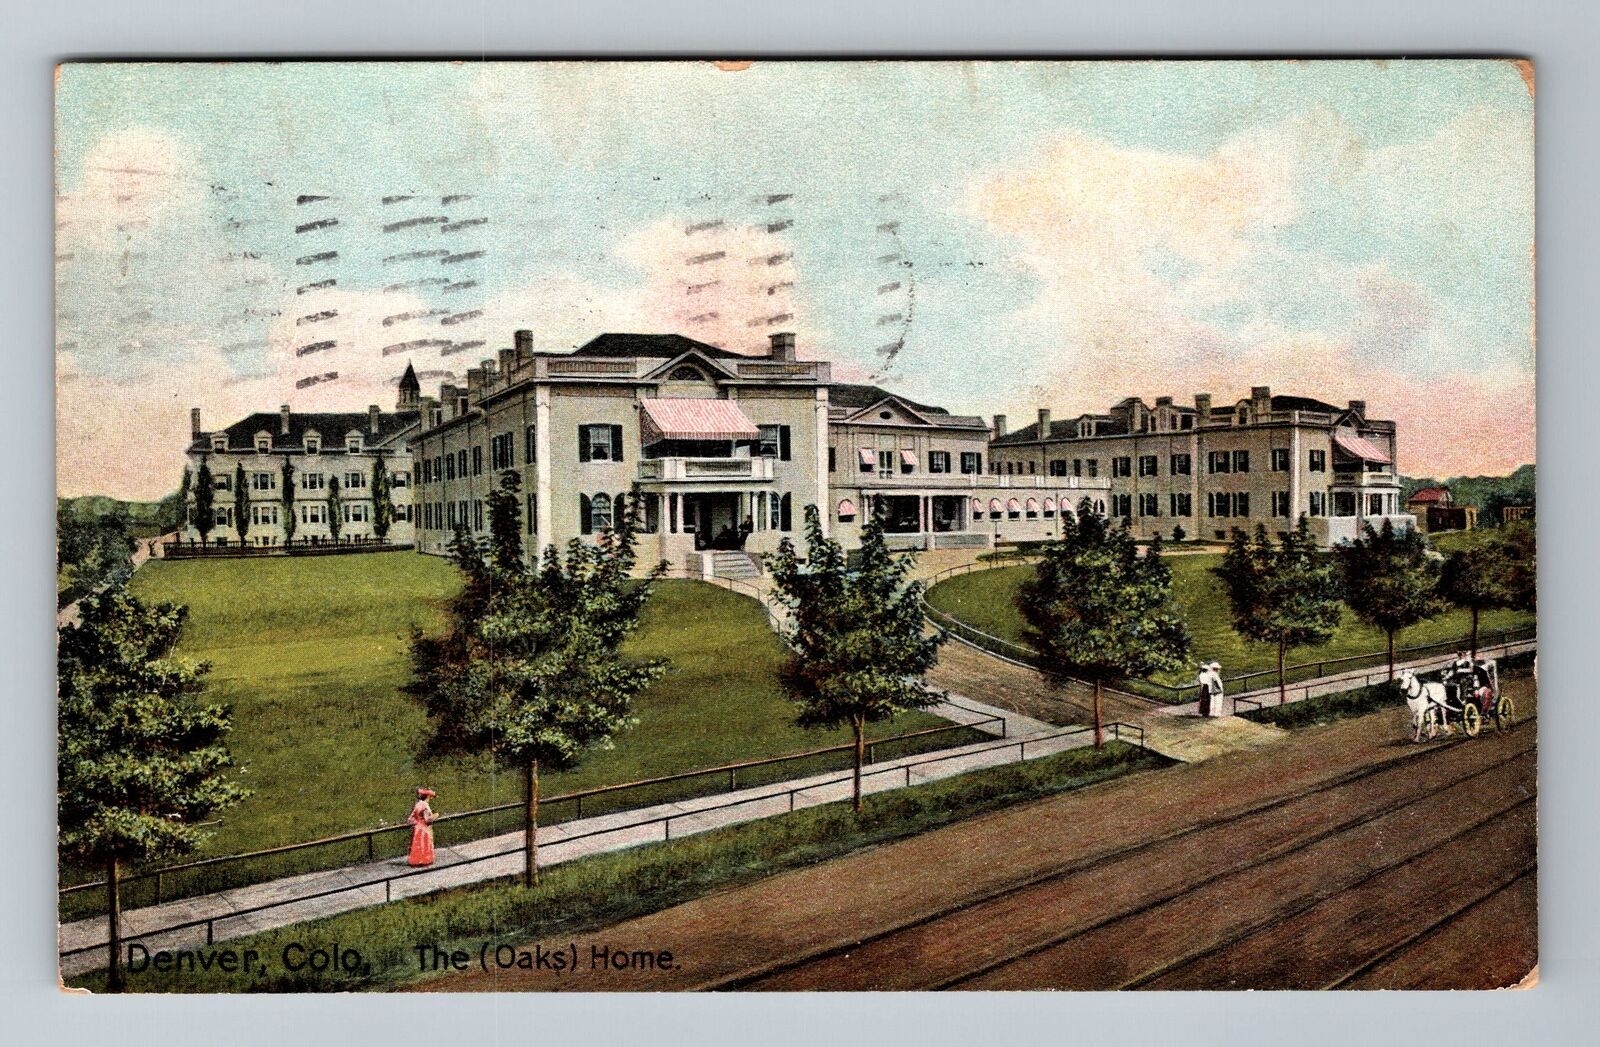 Denver CO-Colorado, Air View, The Oaks Home, c1908, Vintage Postcard